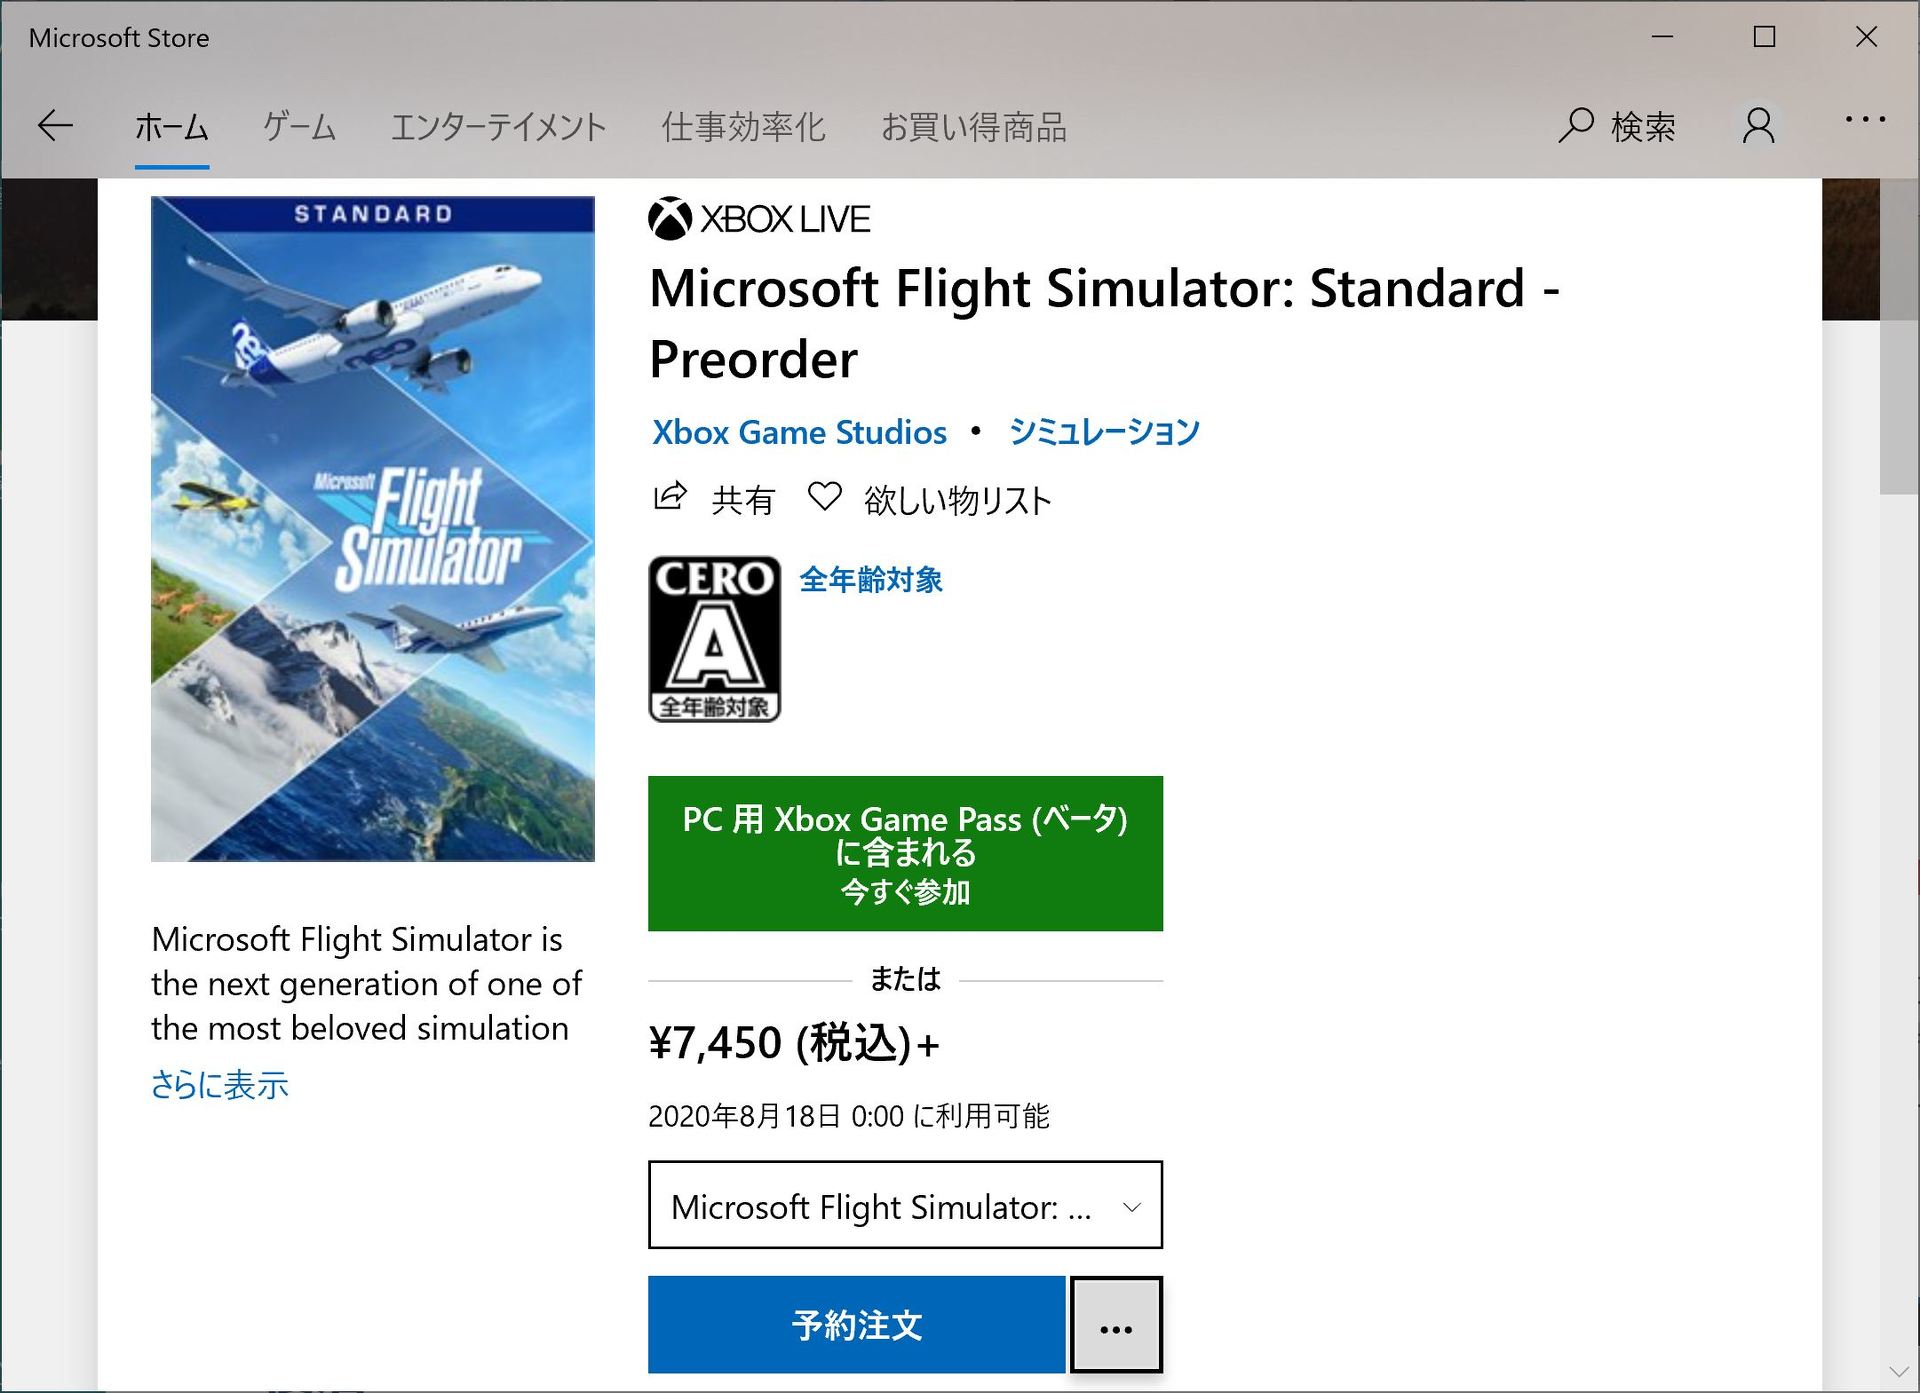 「Microsoft Flight Simulator」のPC向け新版は8月18日発売（予約受付開始）